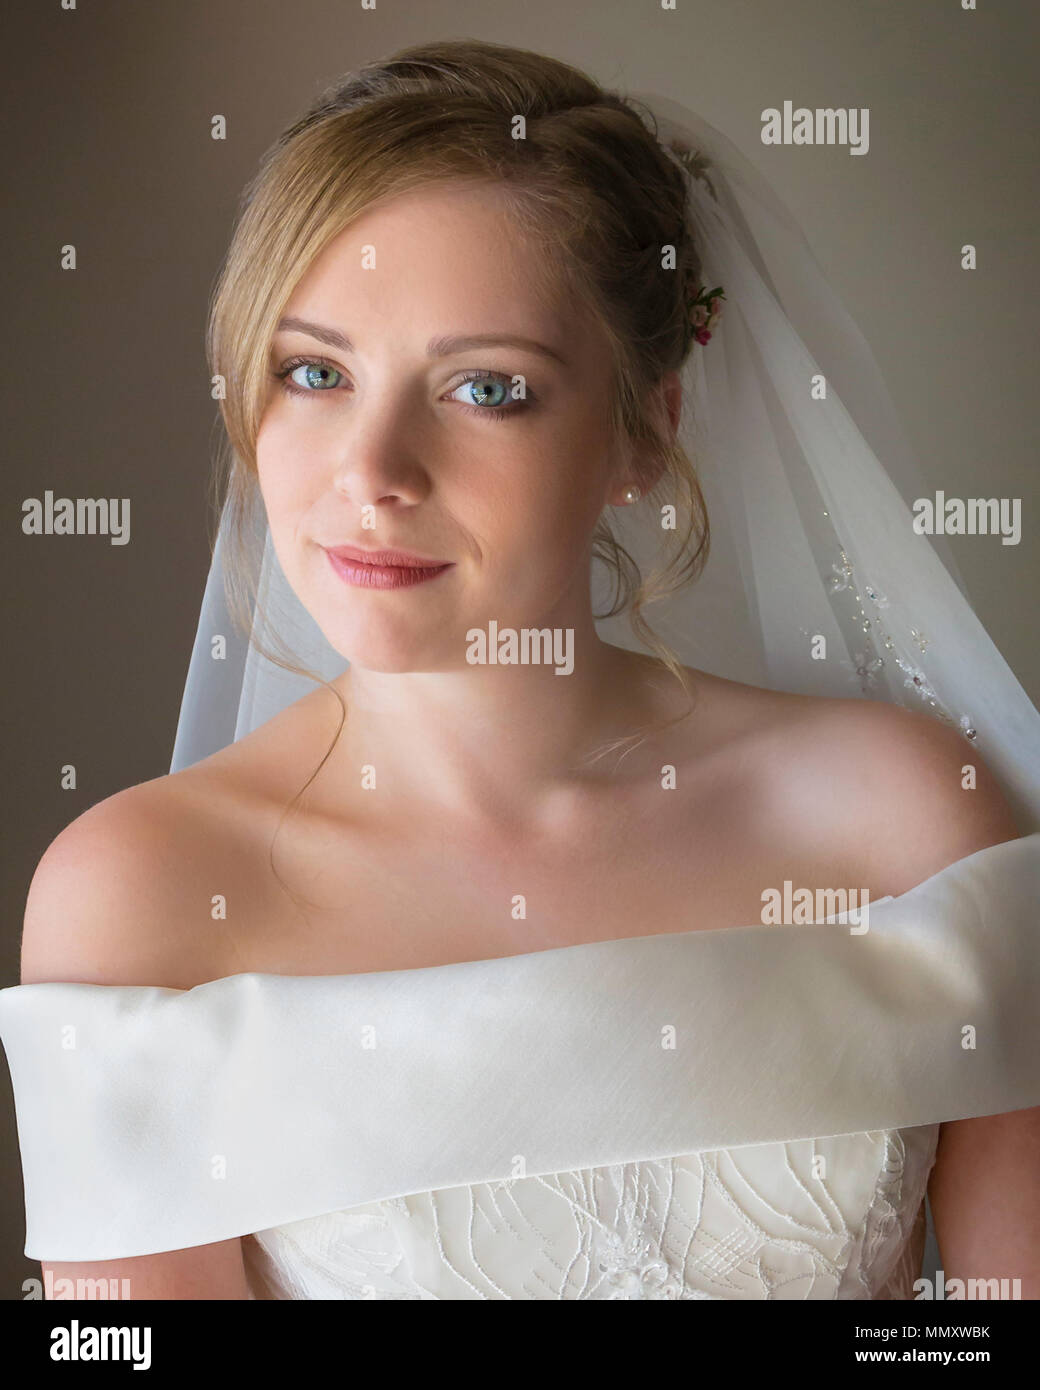 a young bride looking at camera Stock Photo